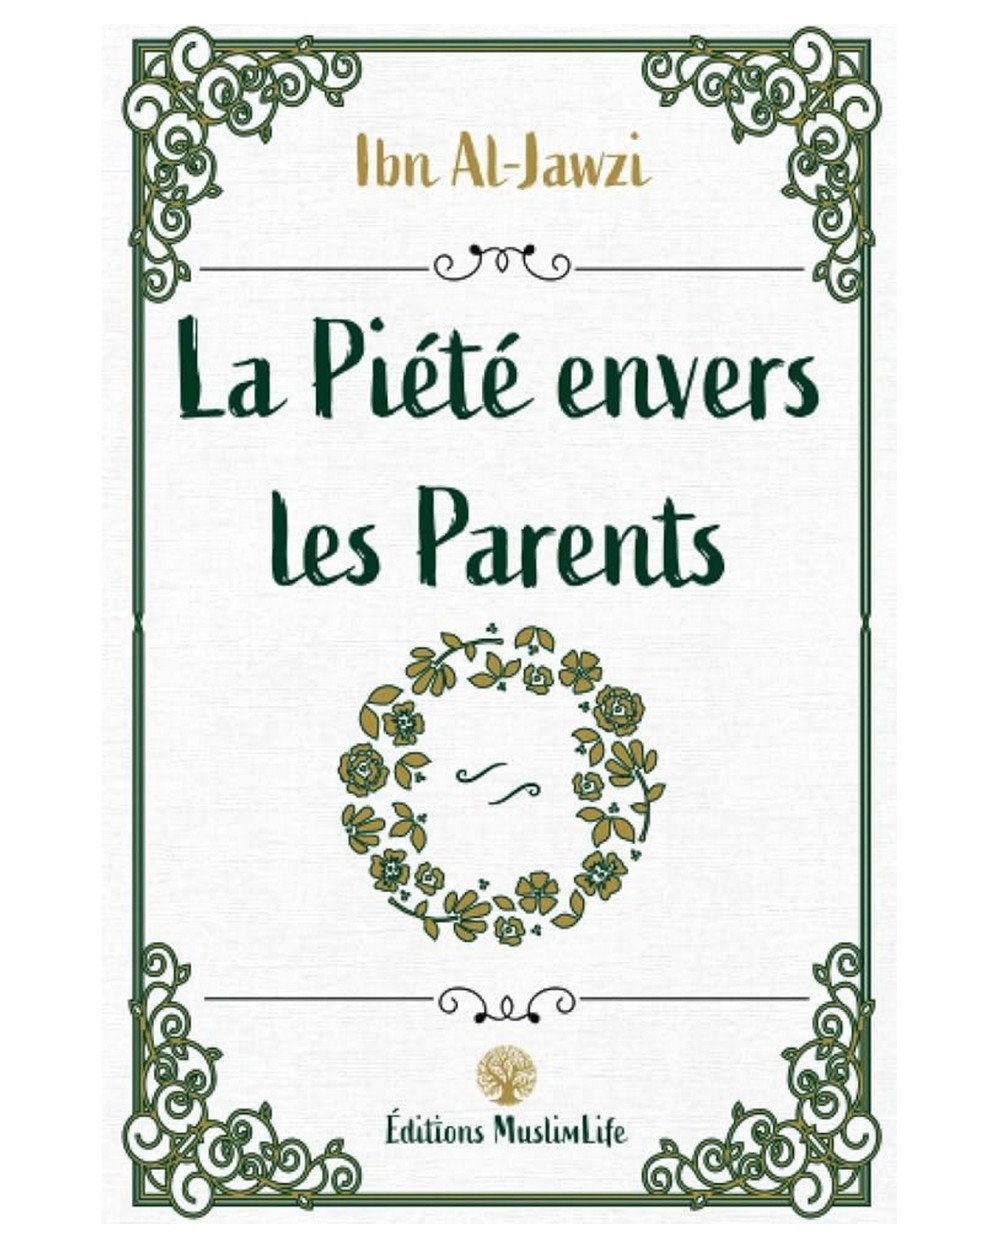 La piété envers les parents - Ibn Al- Jawzi - Editions Muslimlife